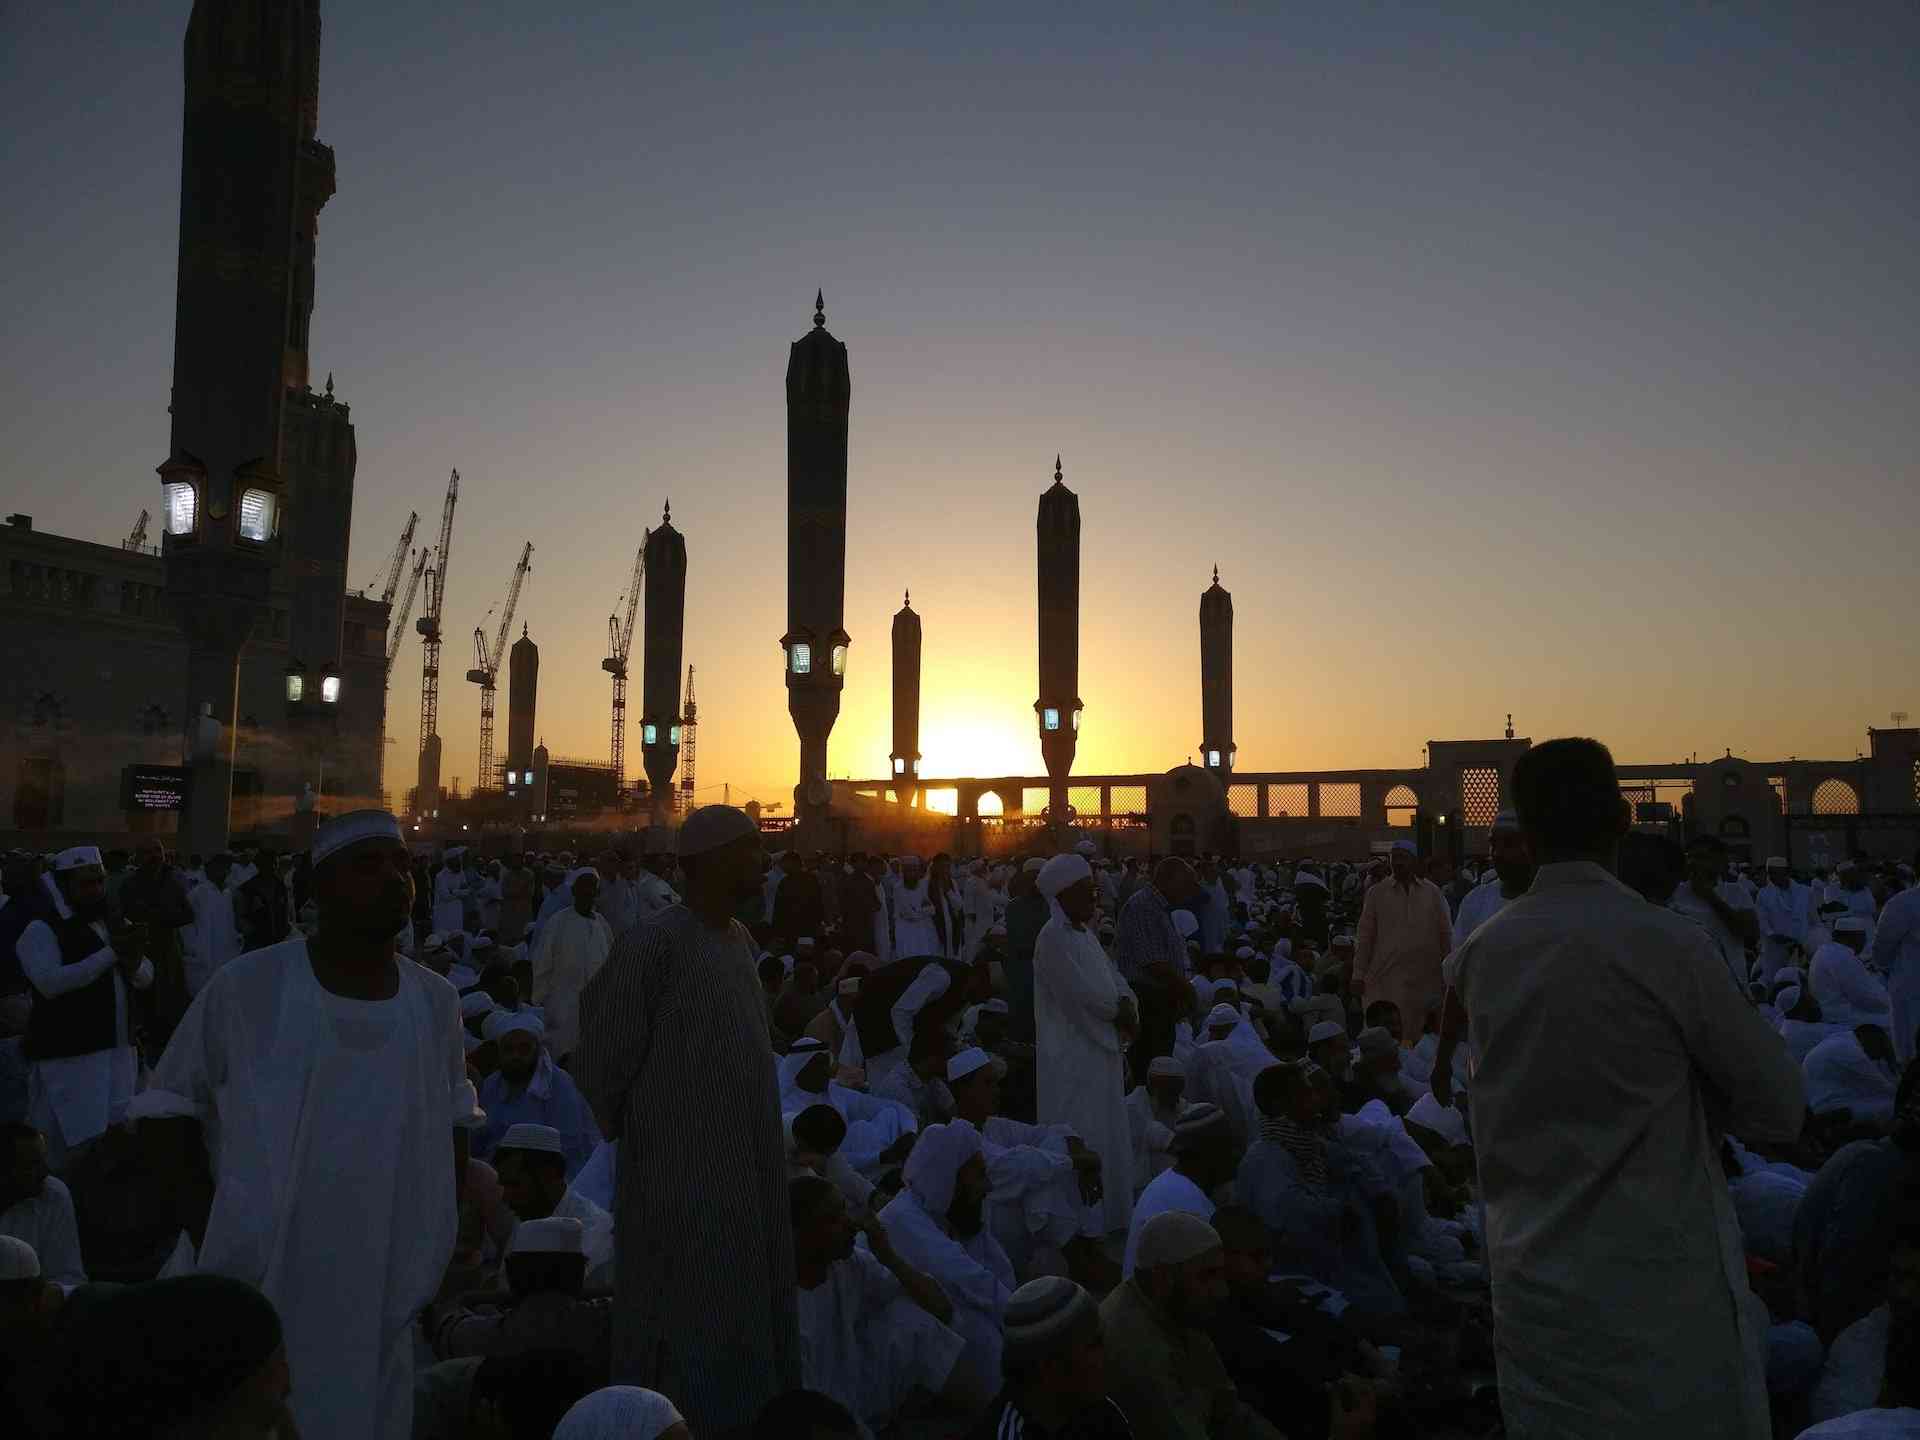 Mengapa Pada Hari Raya Idul Fitri Penting untuk Saling Memaafkan?